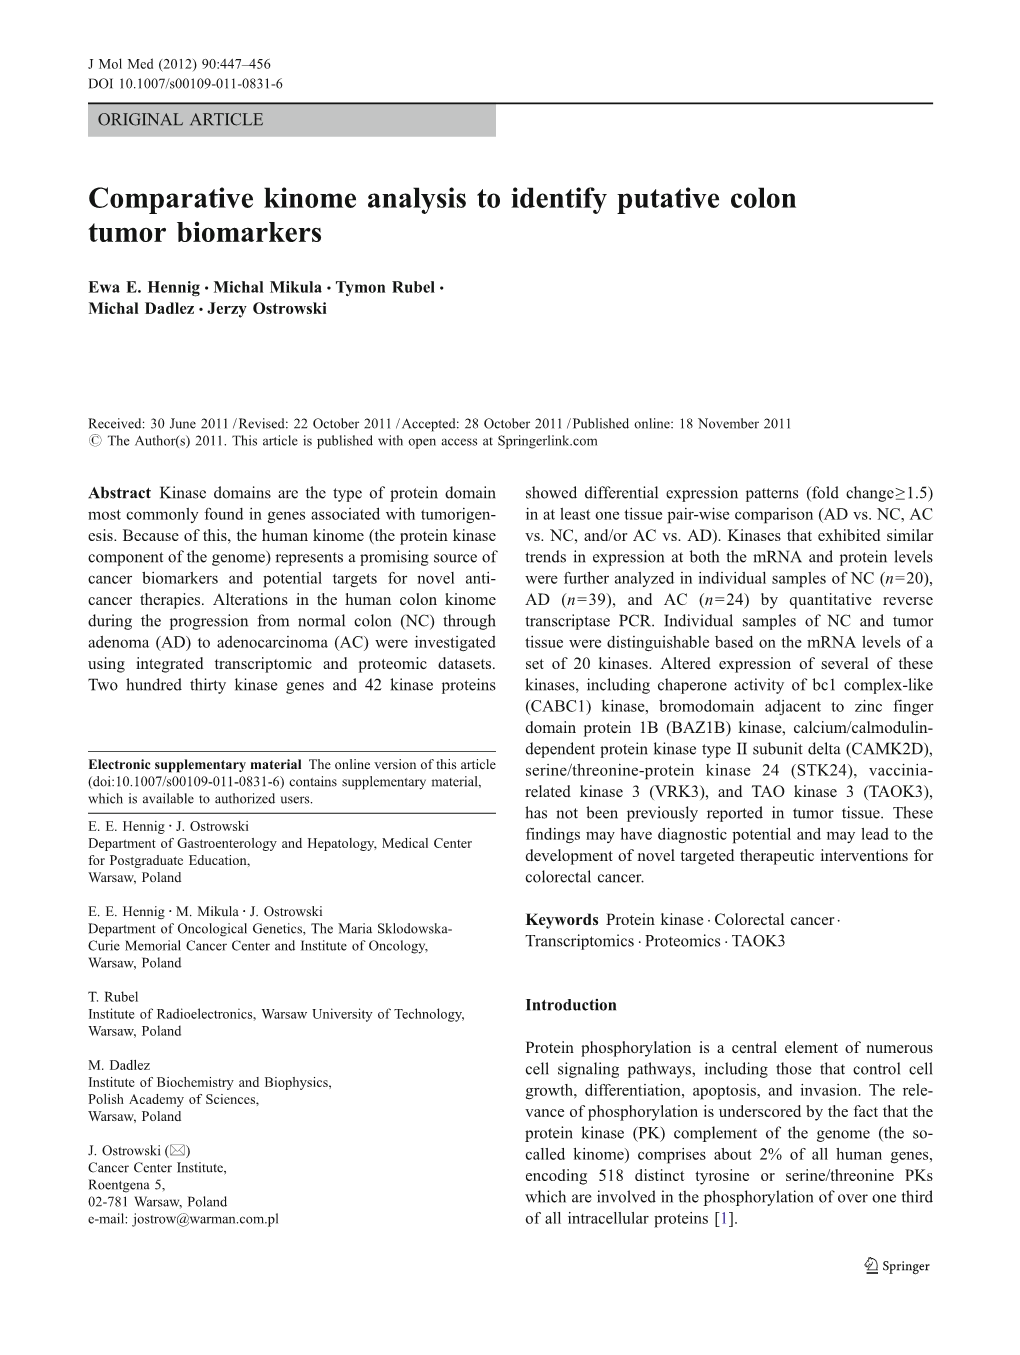 Comparative Kinome Analysis to Identify Putative Colon Tumor Biomarkers